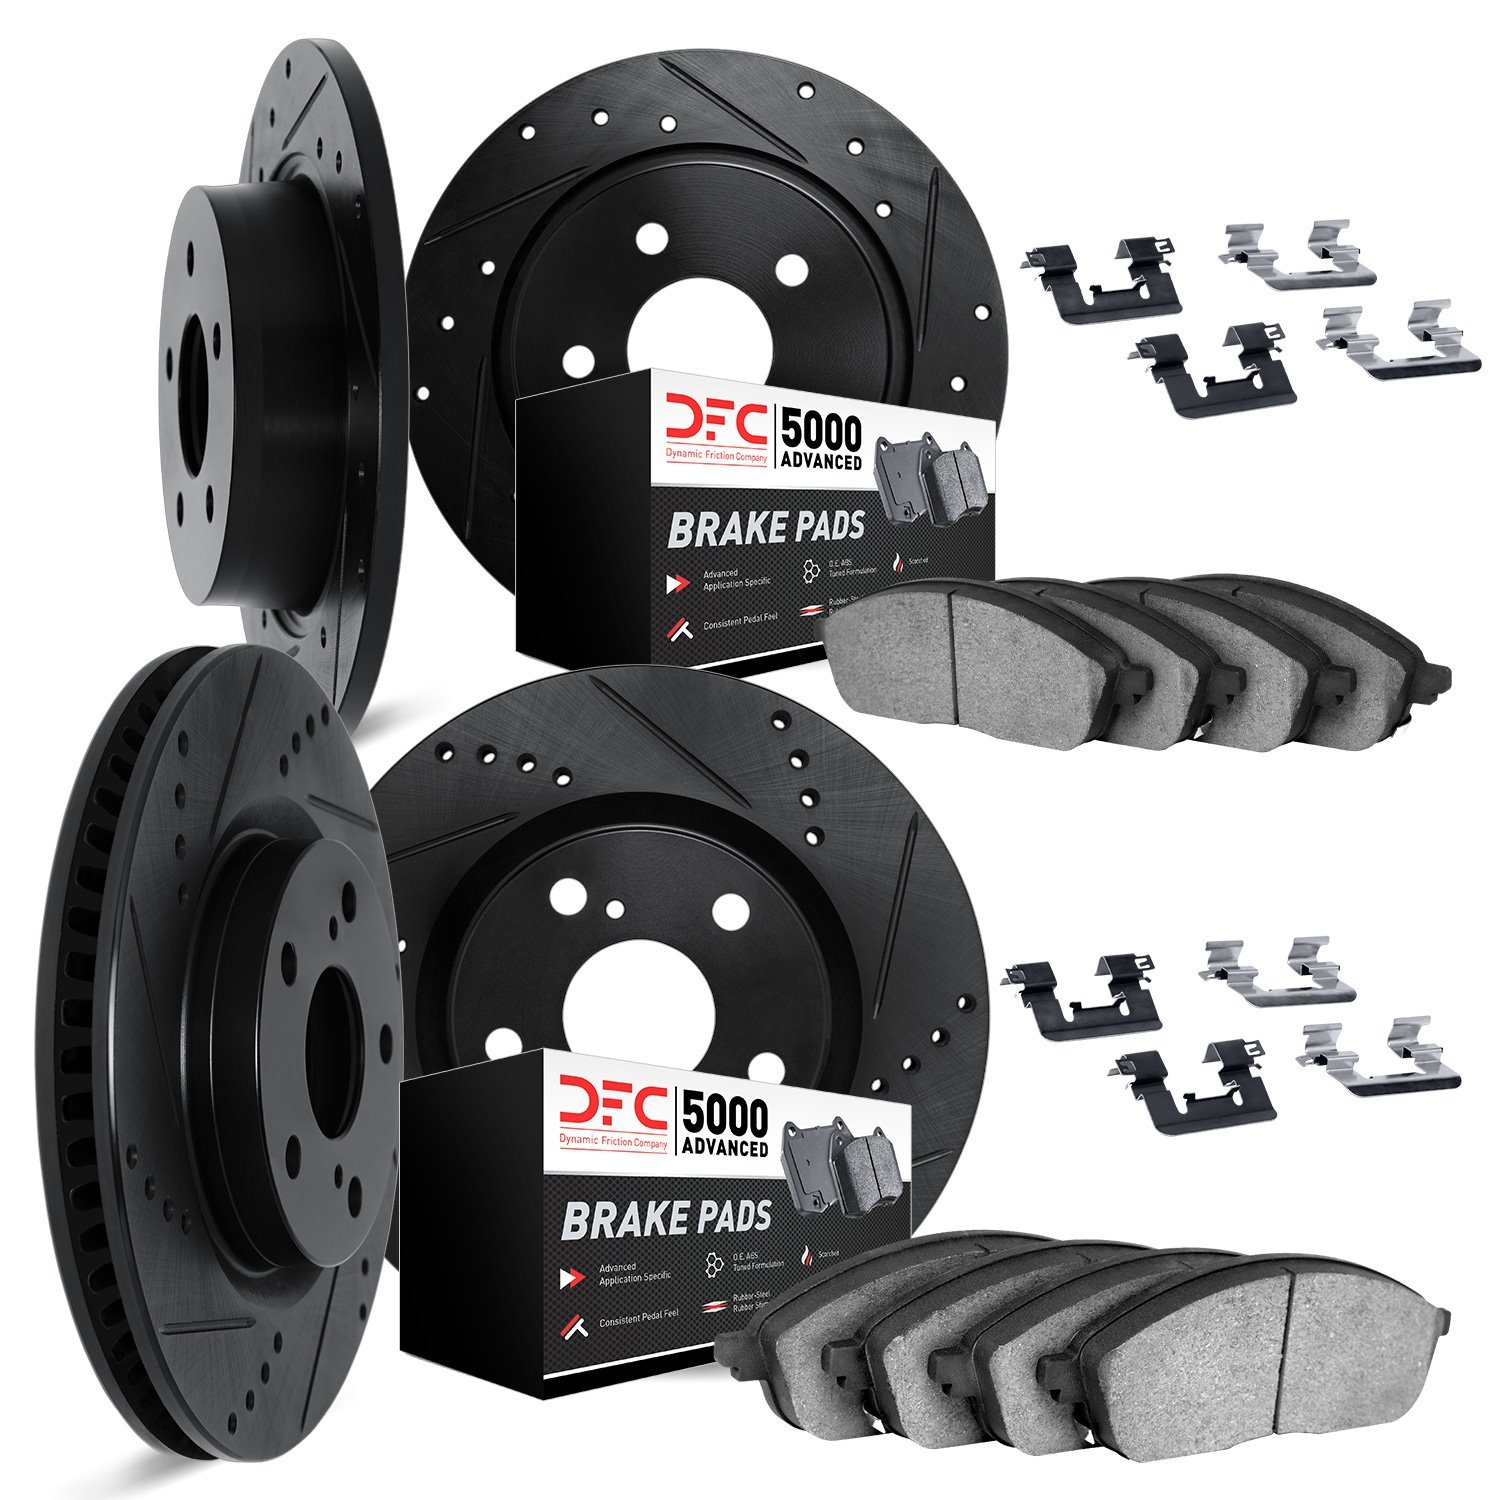 8514-42005 Drilled/Slotted Brake Rotors w/5000 Advanced Brake Pads Kit & Hardware [Black], 2003-2007 Mopar, Position: Front and